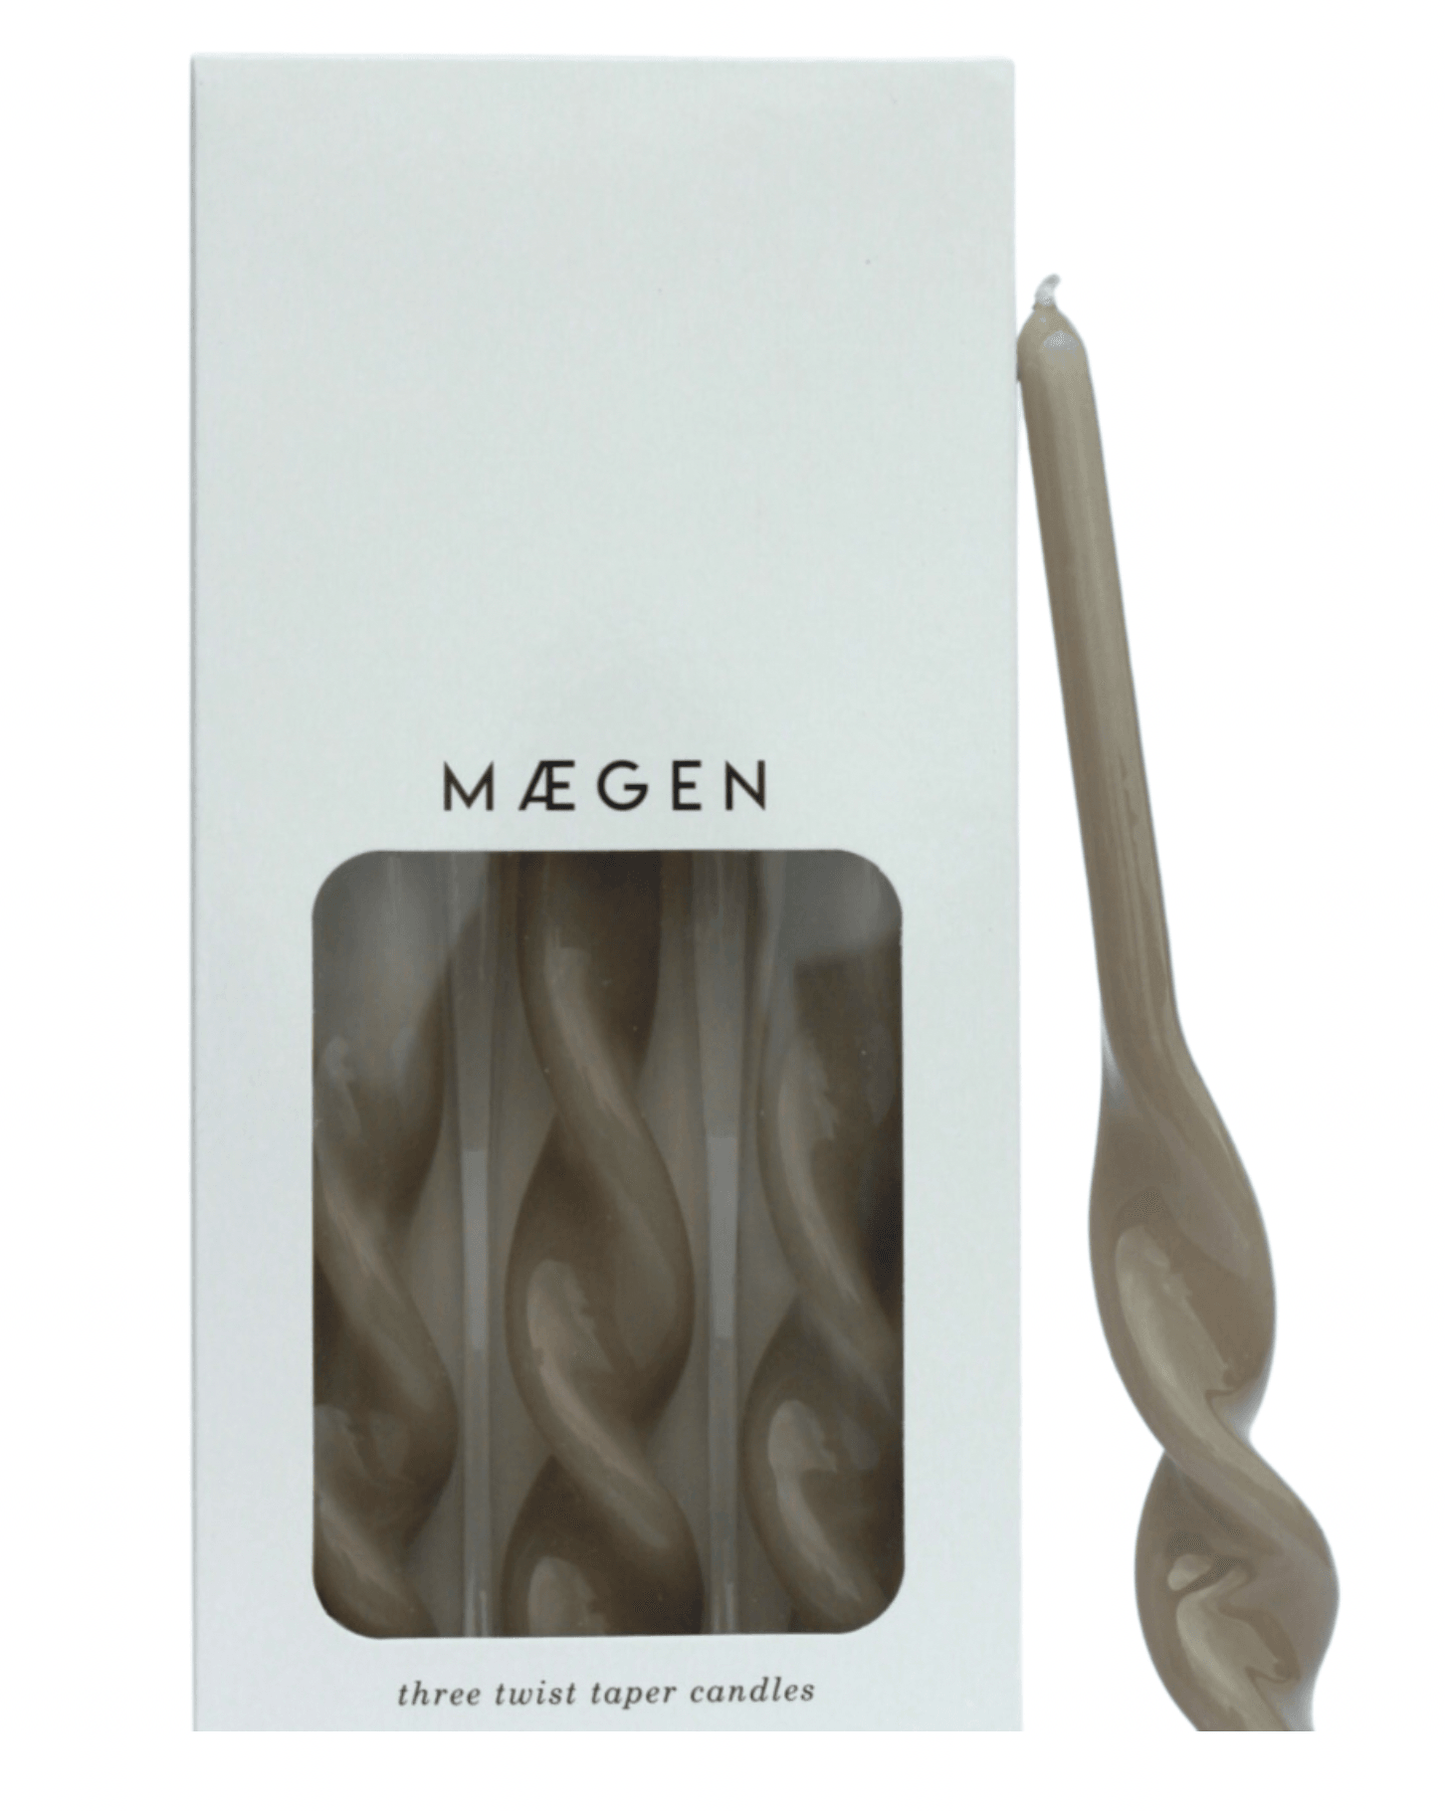 Spiral Taper Candles - Set of 3 by Maegen - Haven